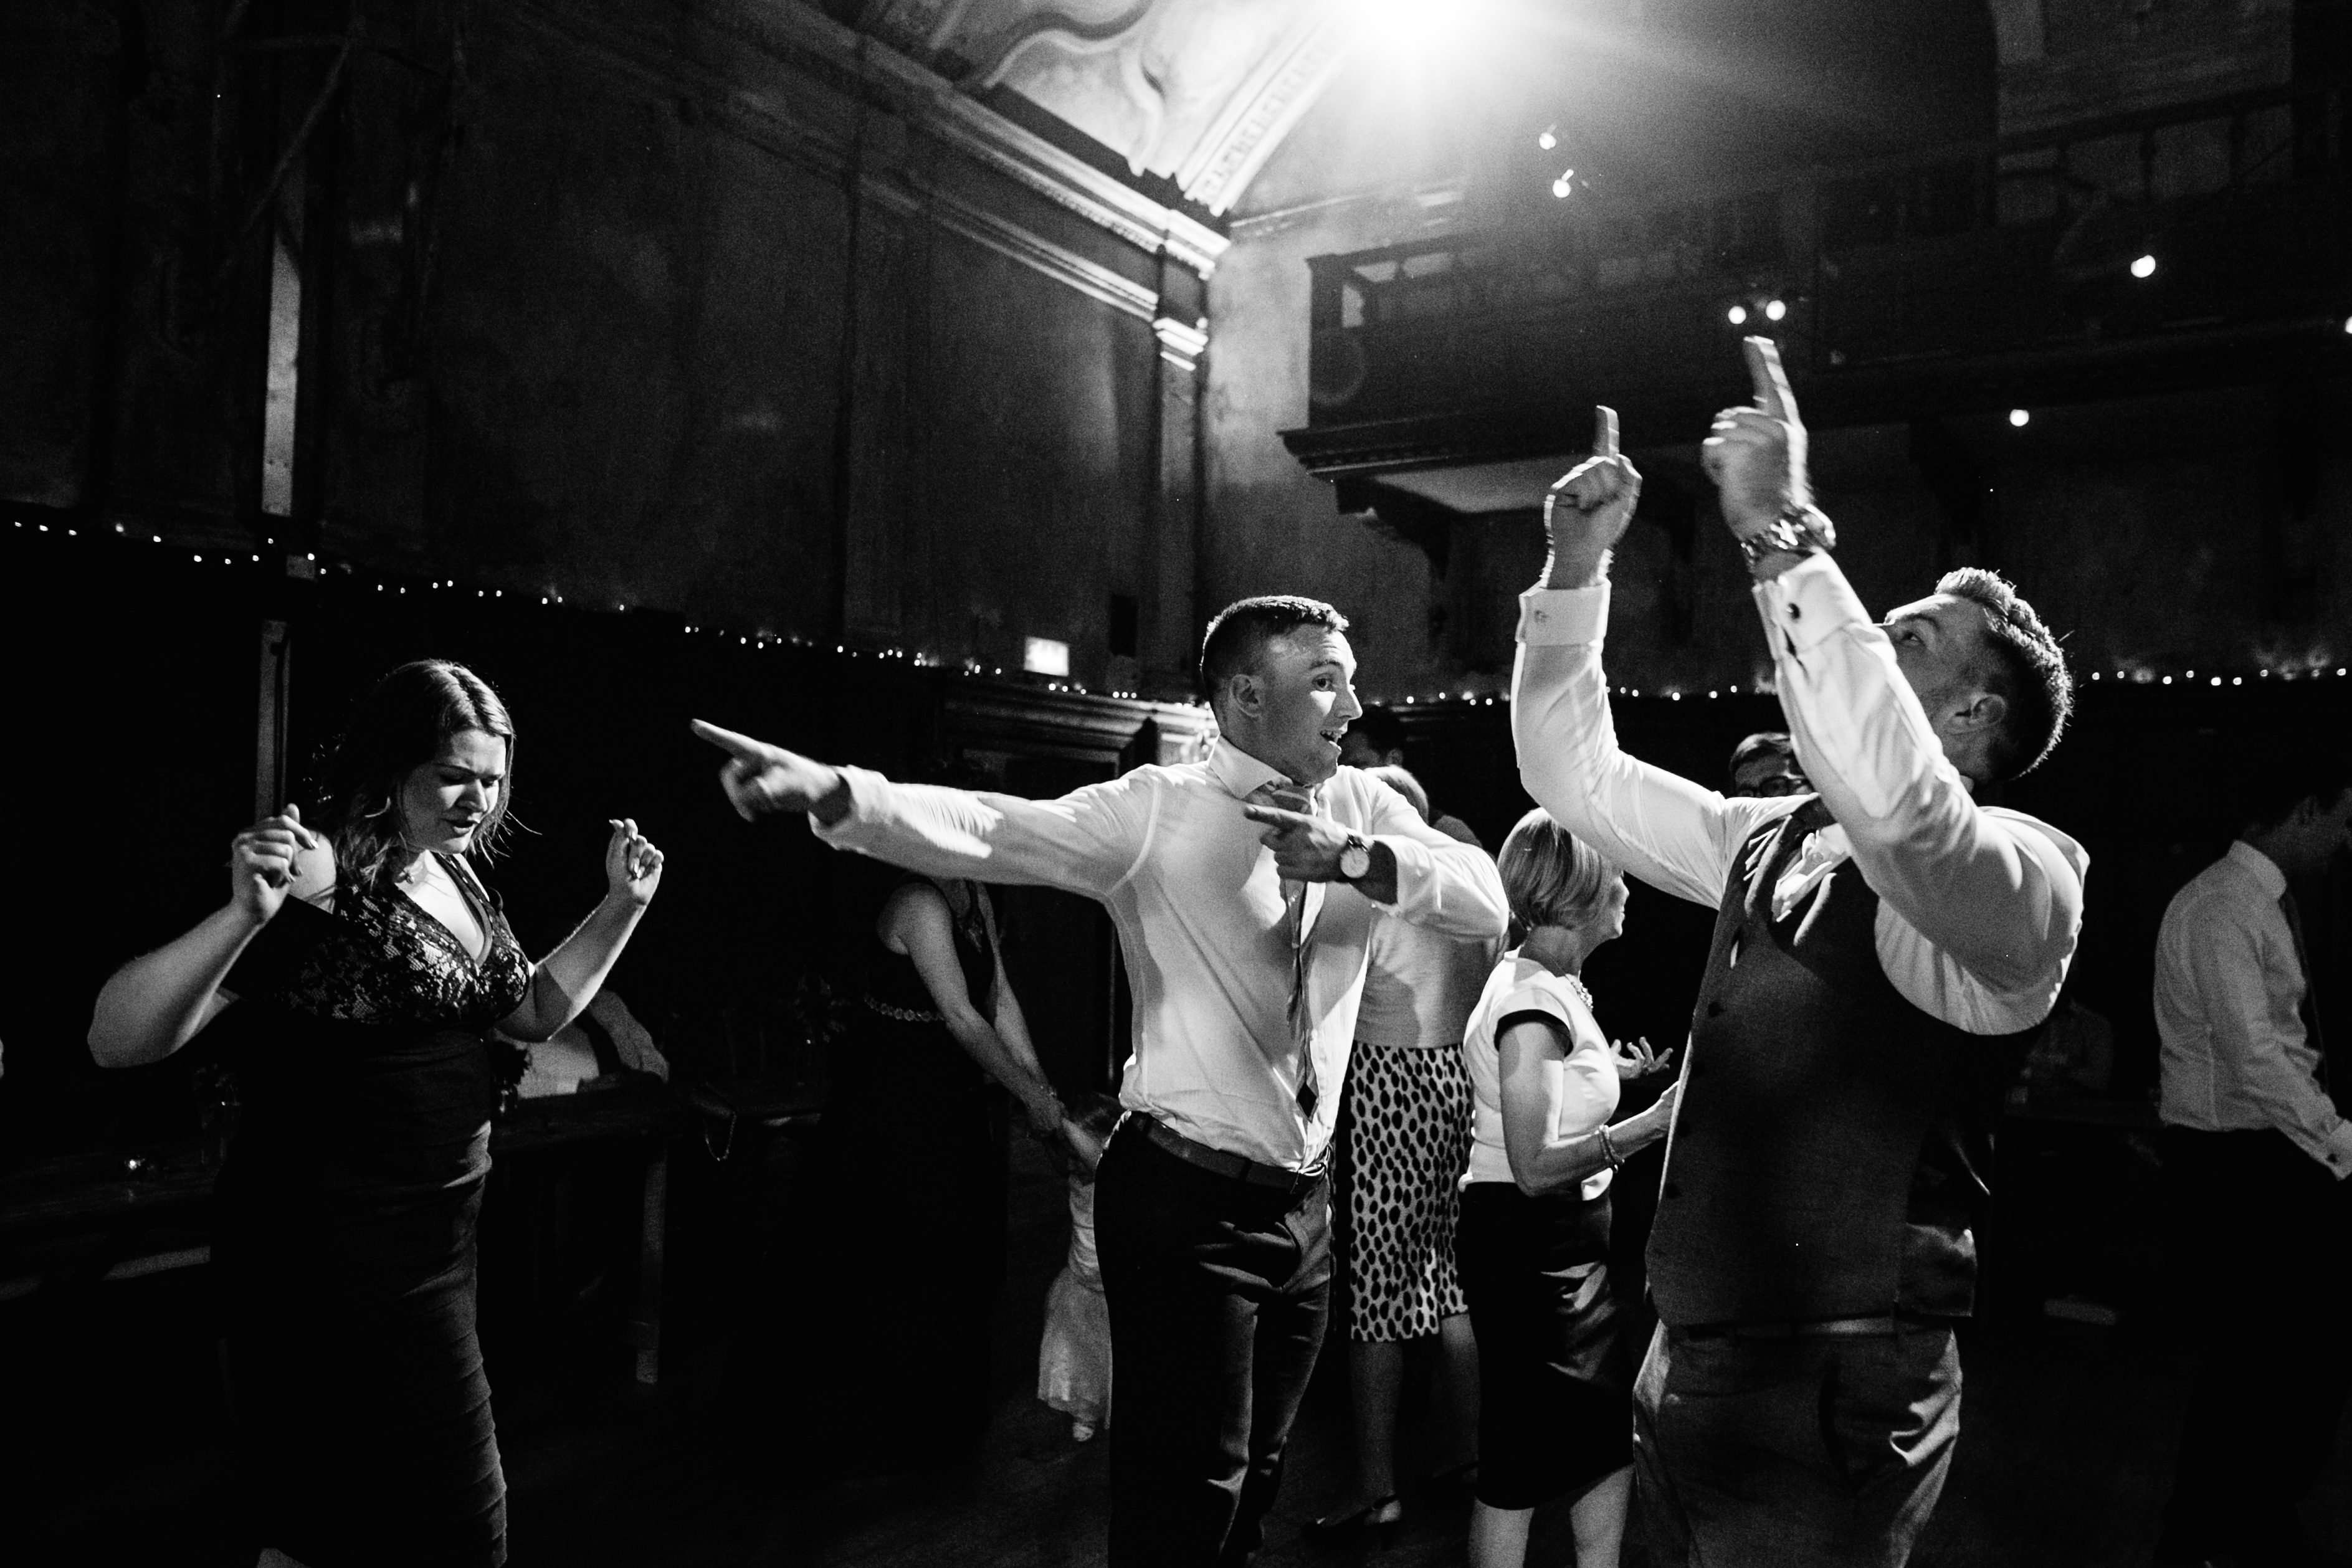 wedding first dance blues band london